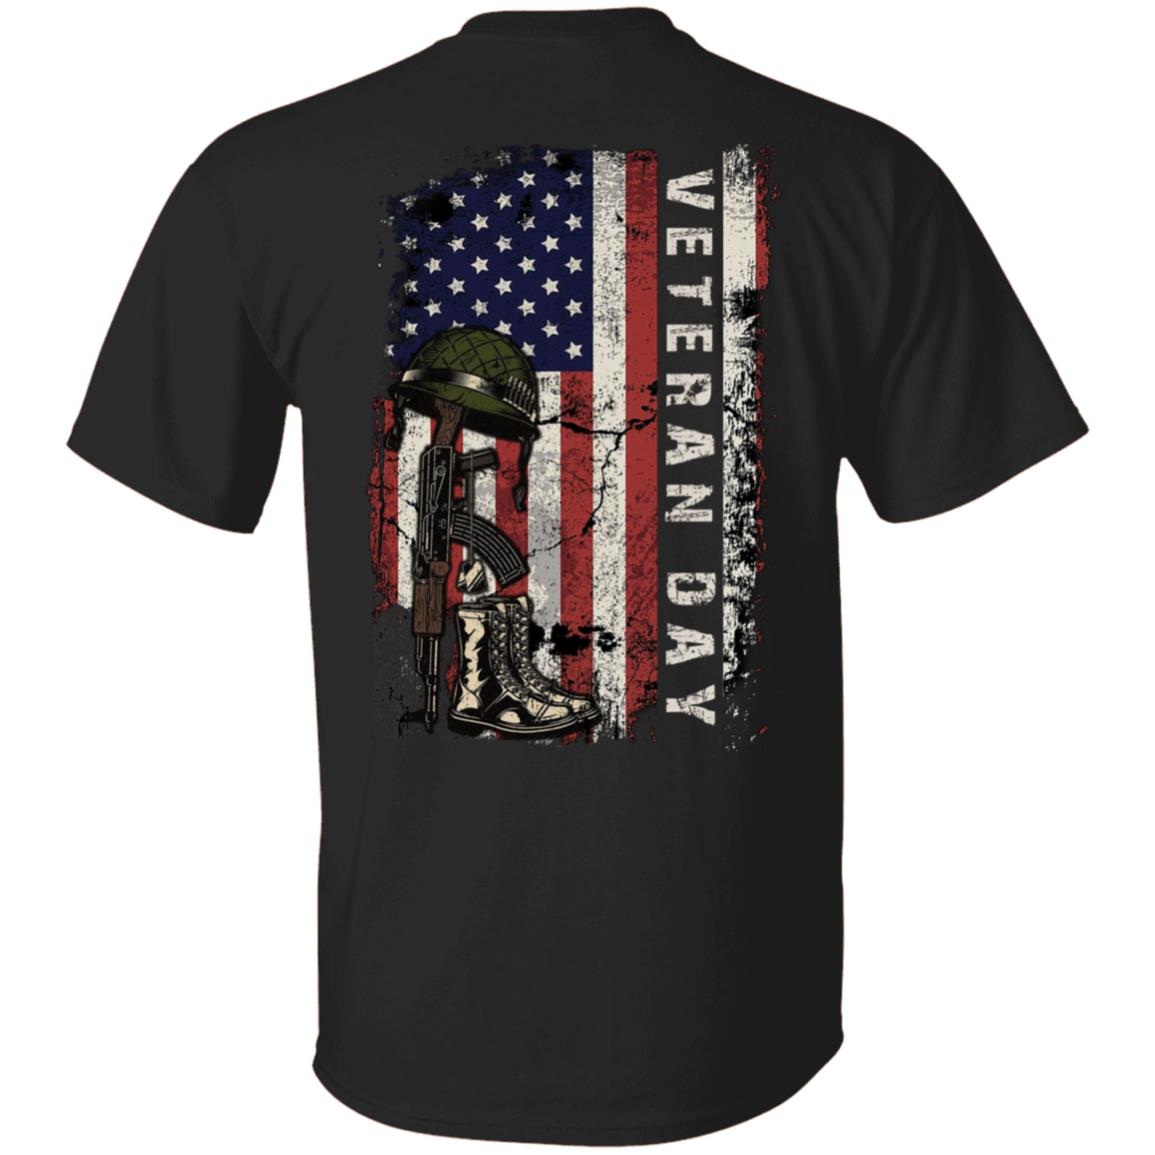 US Flag Veteran Day Gift Shirt